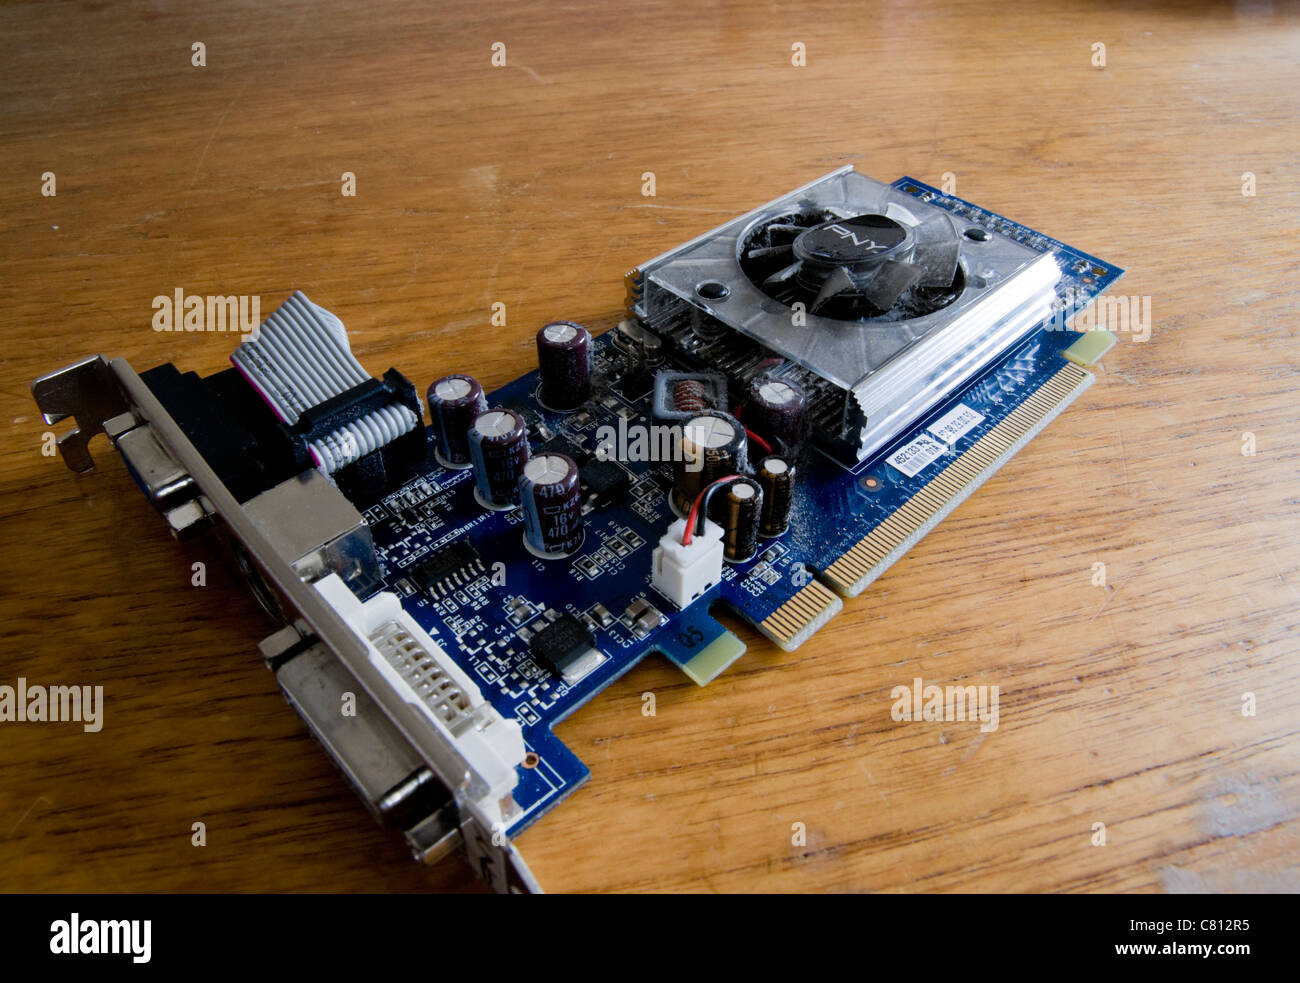 Broken PCI-Express Graphics card Stock Photo - Alamy